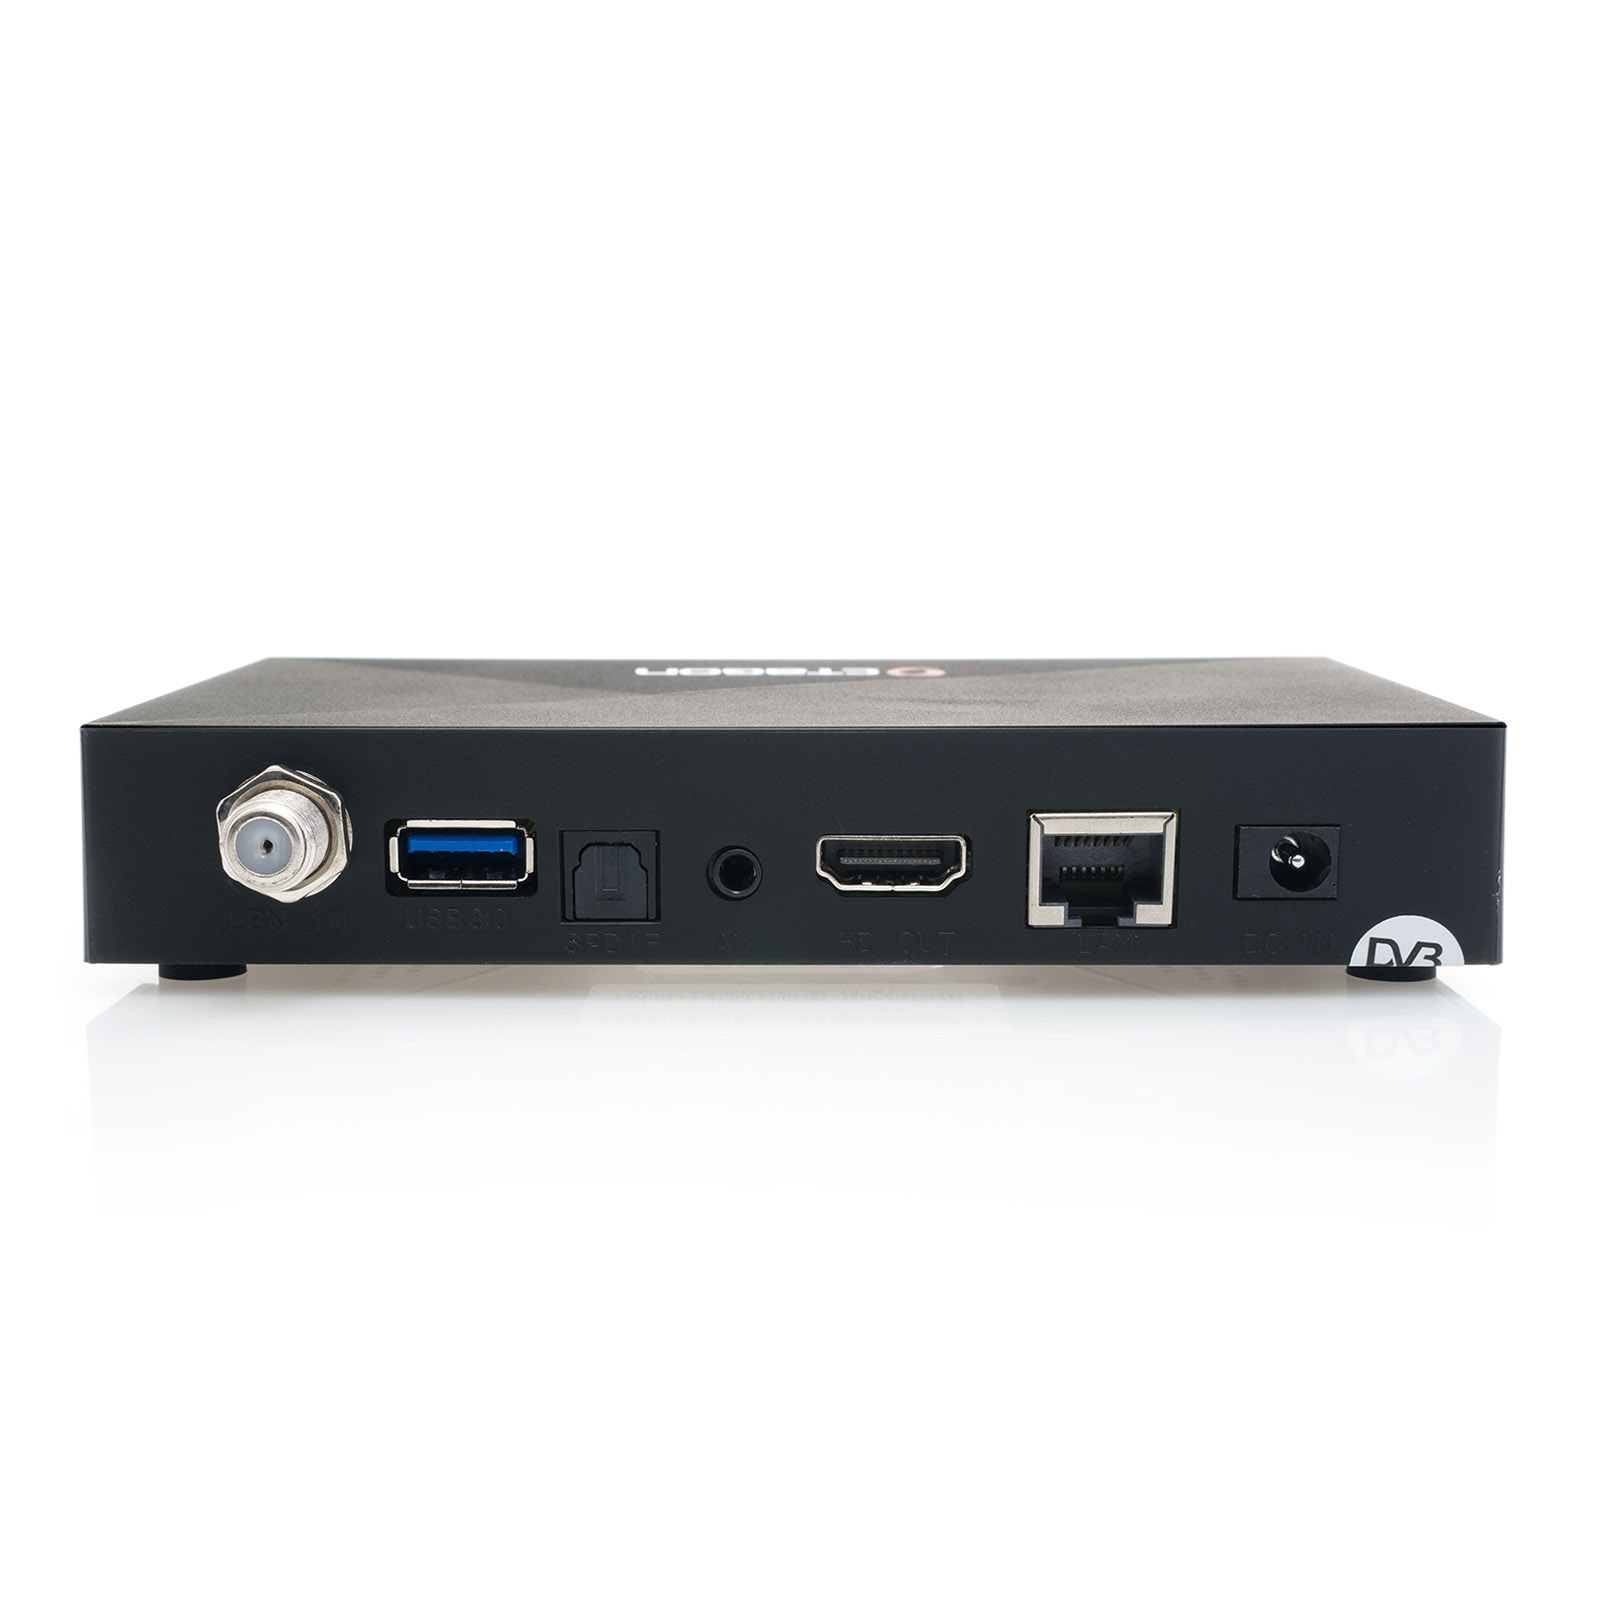 OCTAGON SX88 4K UHD S2+IP USB HDMI TV IP H.265 Receiver Sat UHD Kartenleser TV IP 4K Mediaplayer (Schwarz)